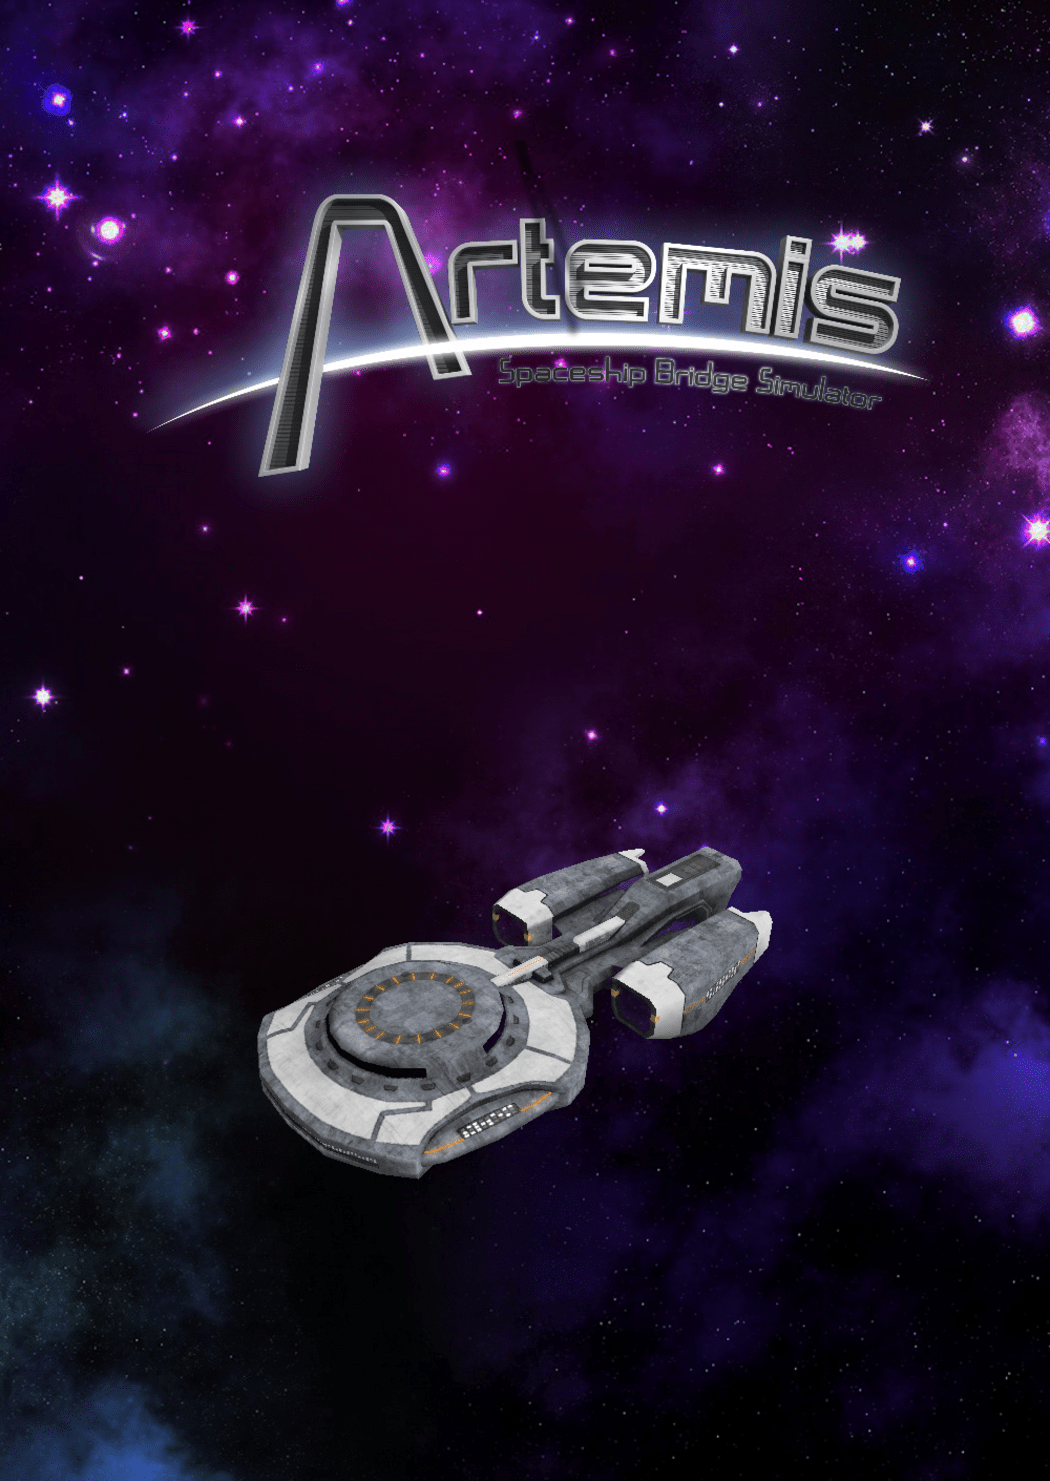 Buy Artemis Spaceship Bridge Simulator PC Steam key! Cheap price | ENEBA